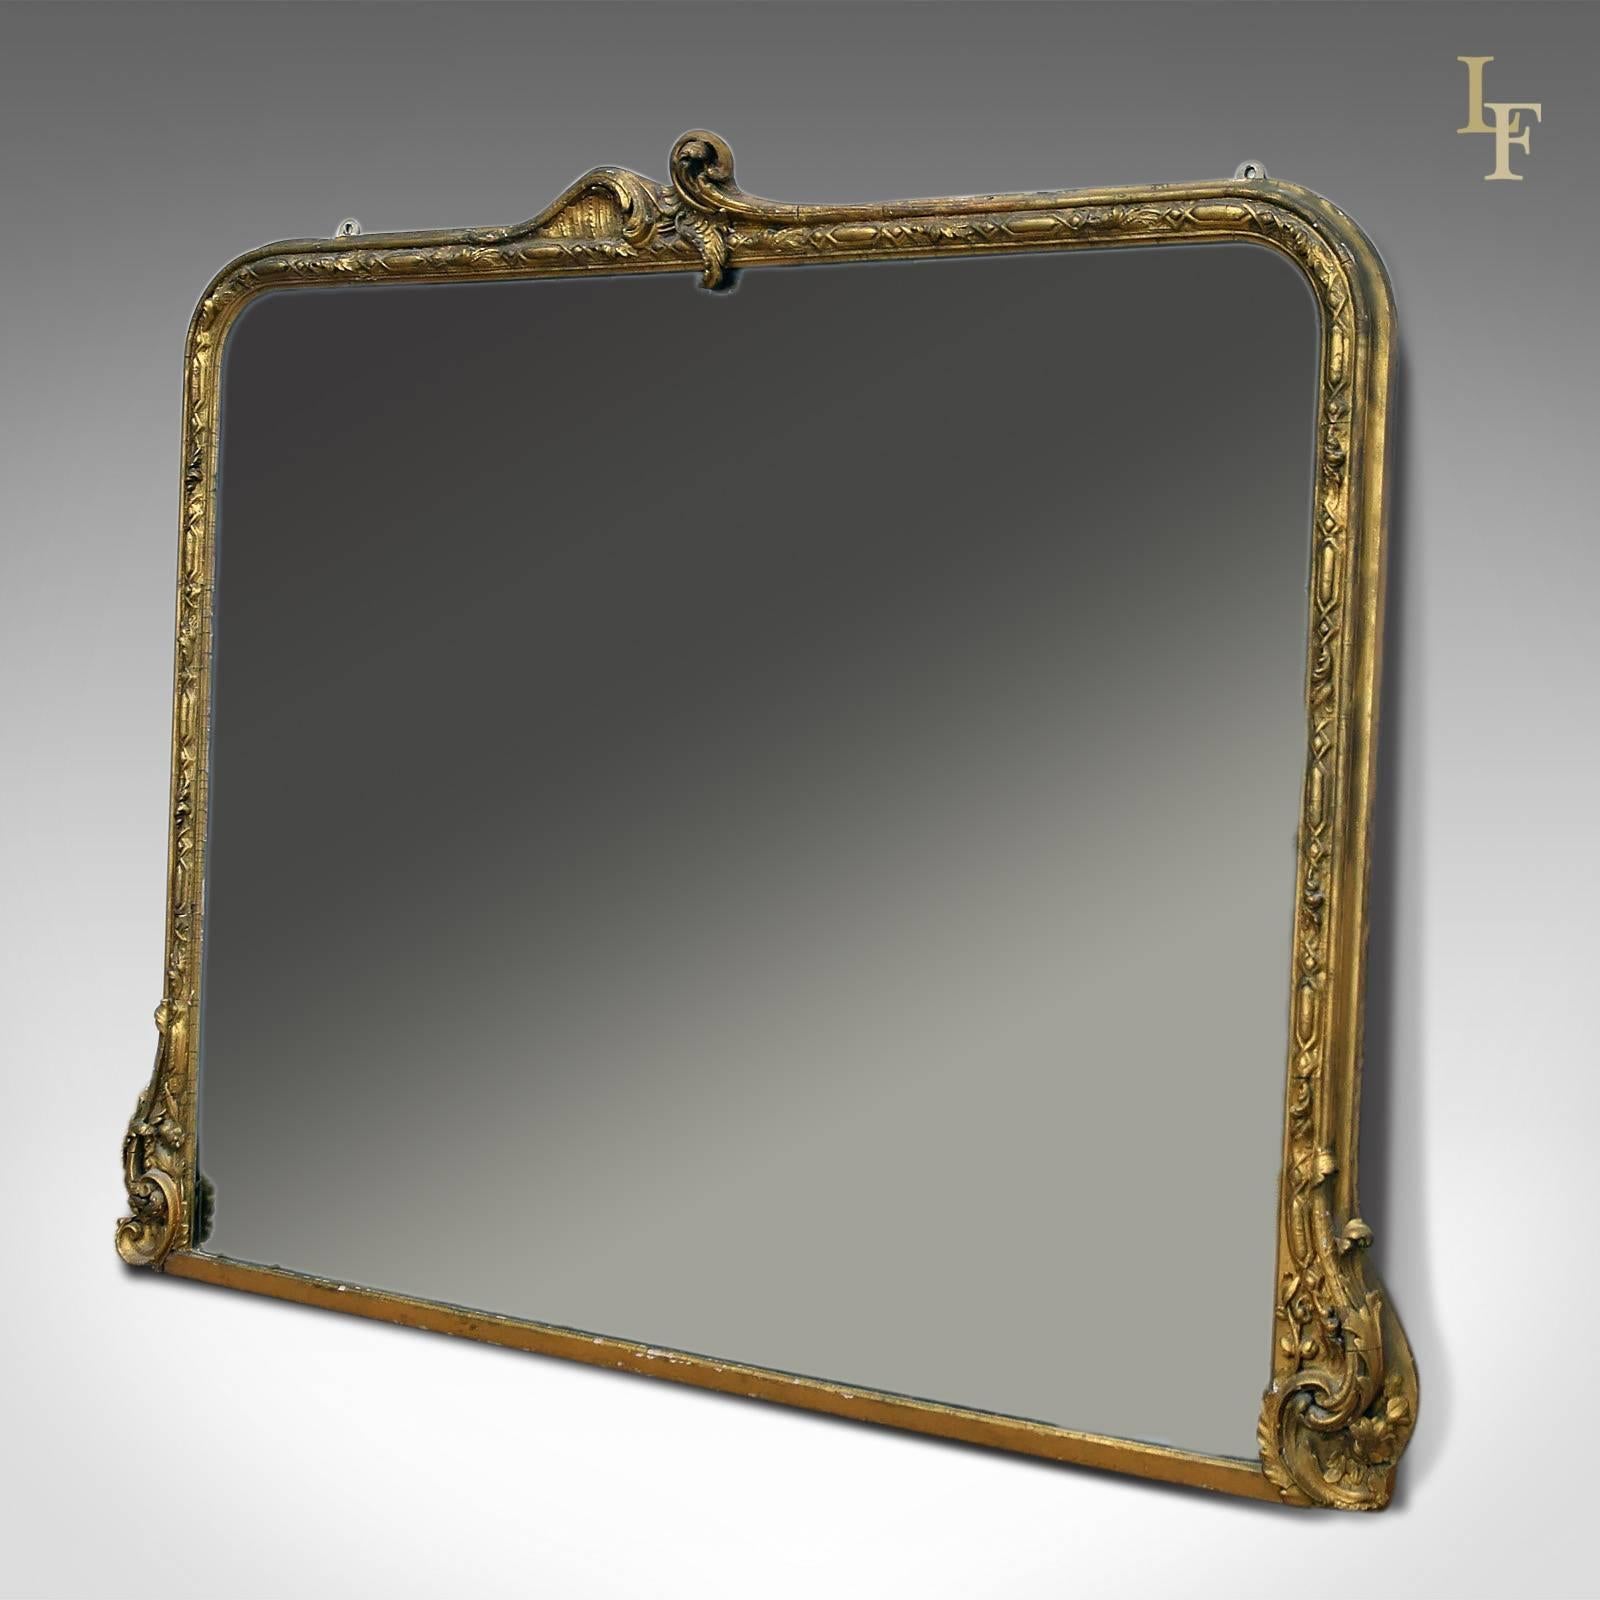 British 19th Century Antique Overmantel Mirror, Large, Victorian, Wall